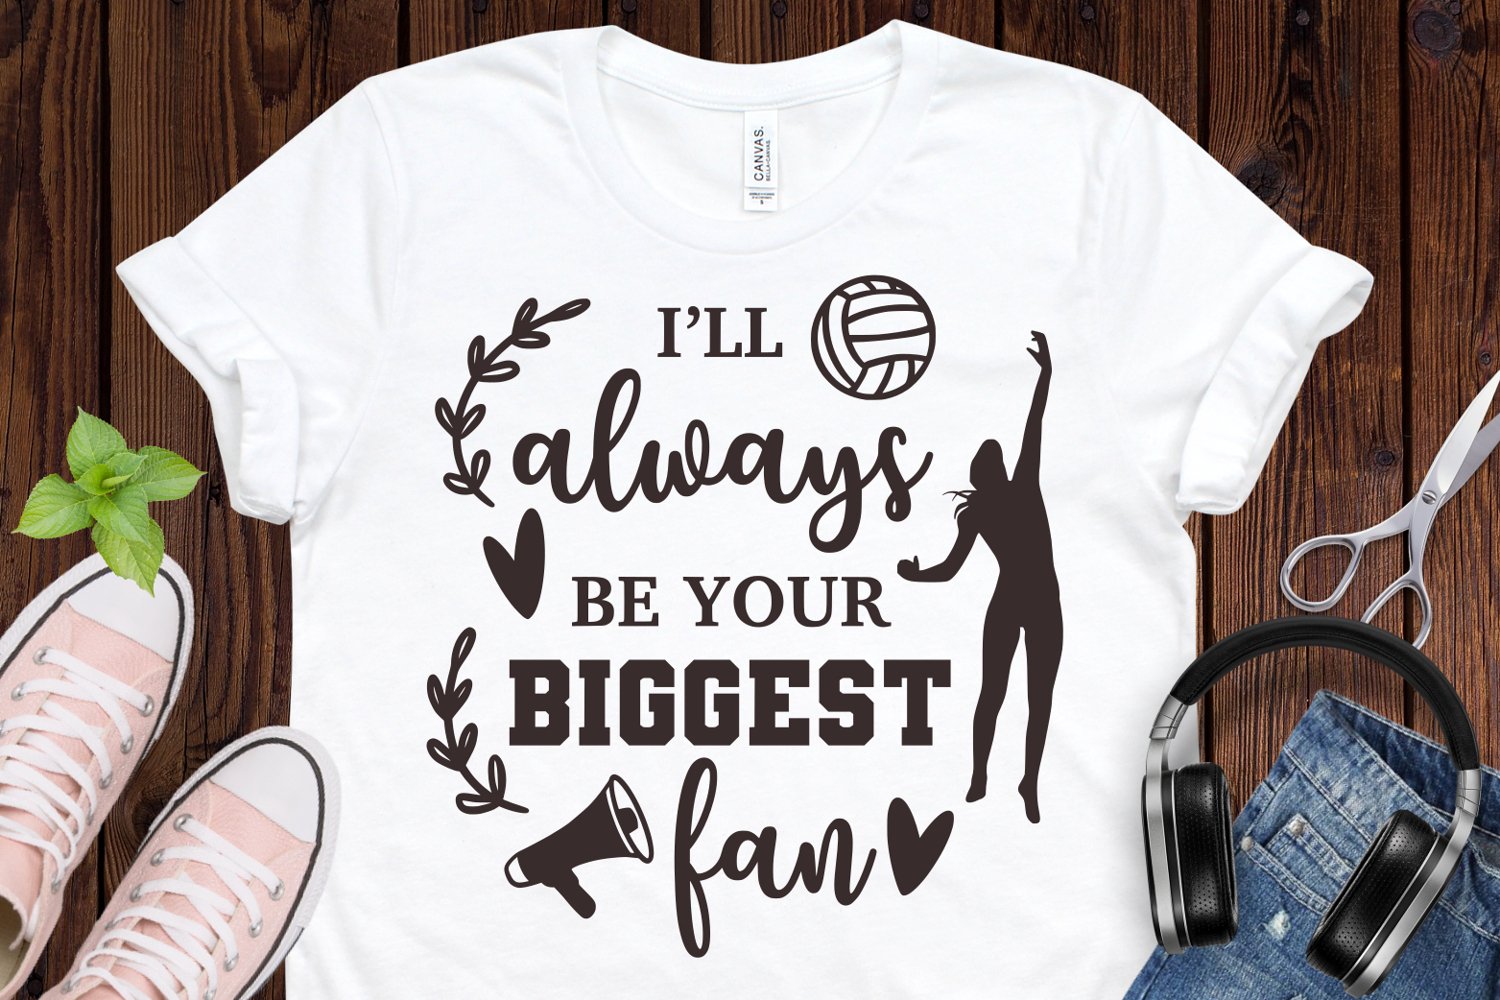 I'll always be your biggest fan - t-shirt design.